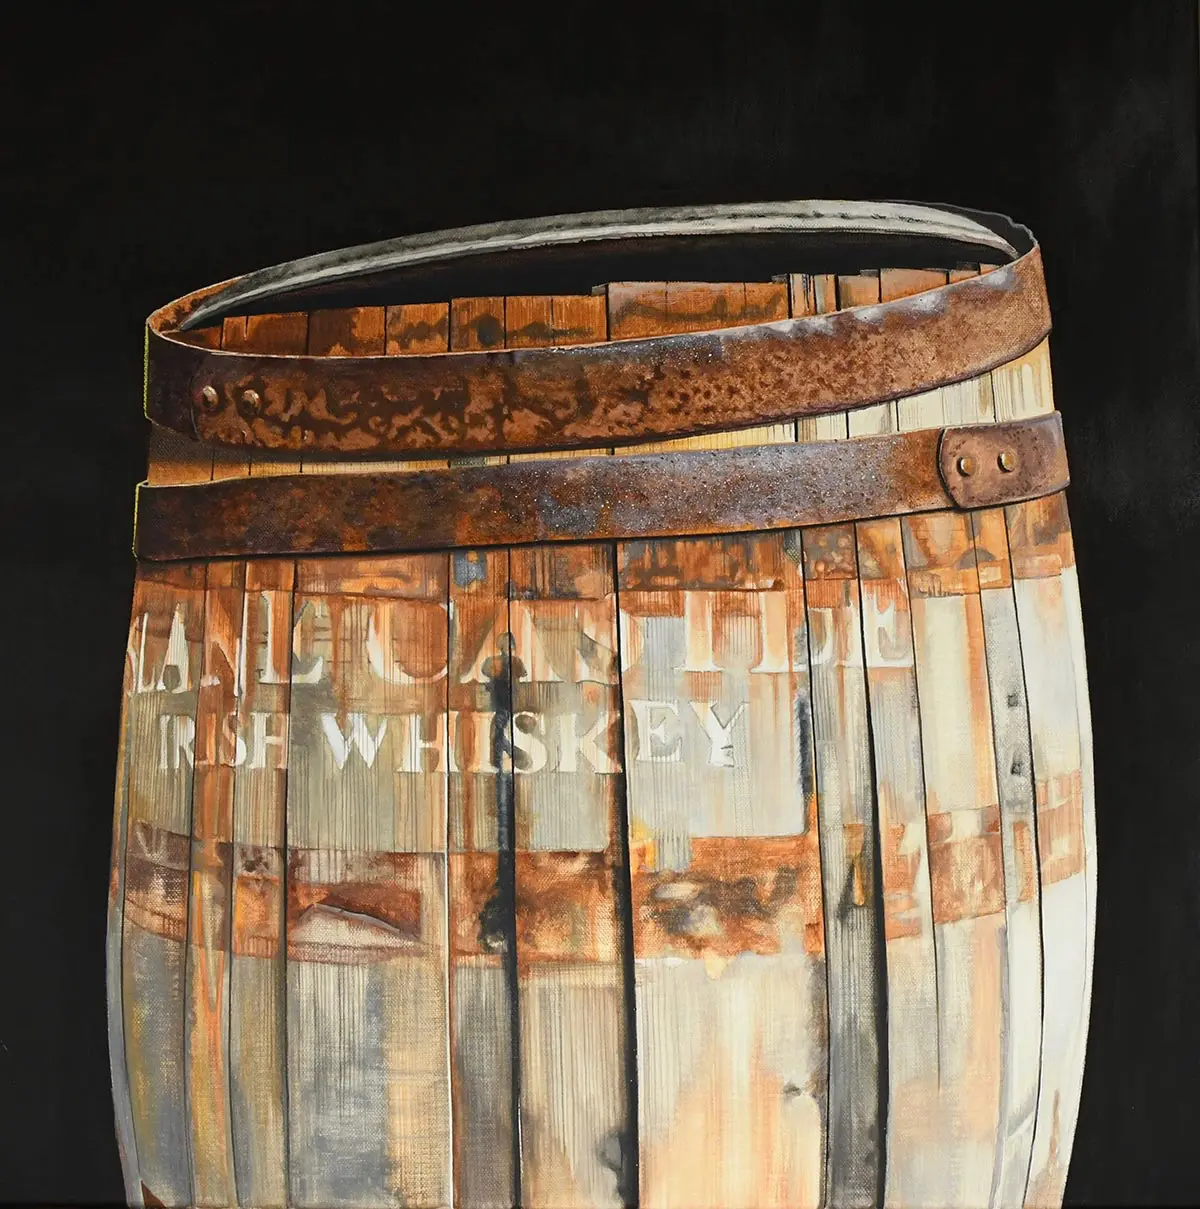 'ROTTEN BEAUTY' (SLANE CASTLE DISTILLERY)  60 x 60 cm, Öl auf Leinwand (2019)